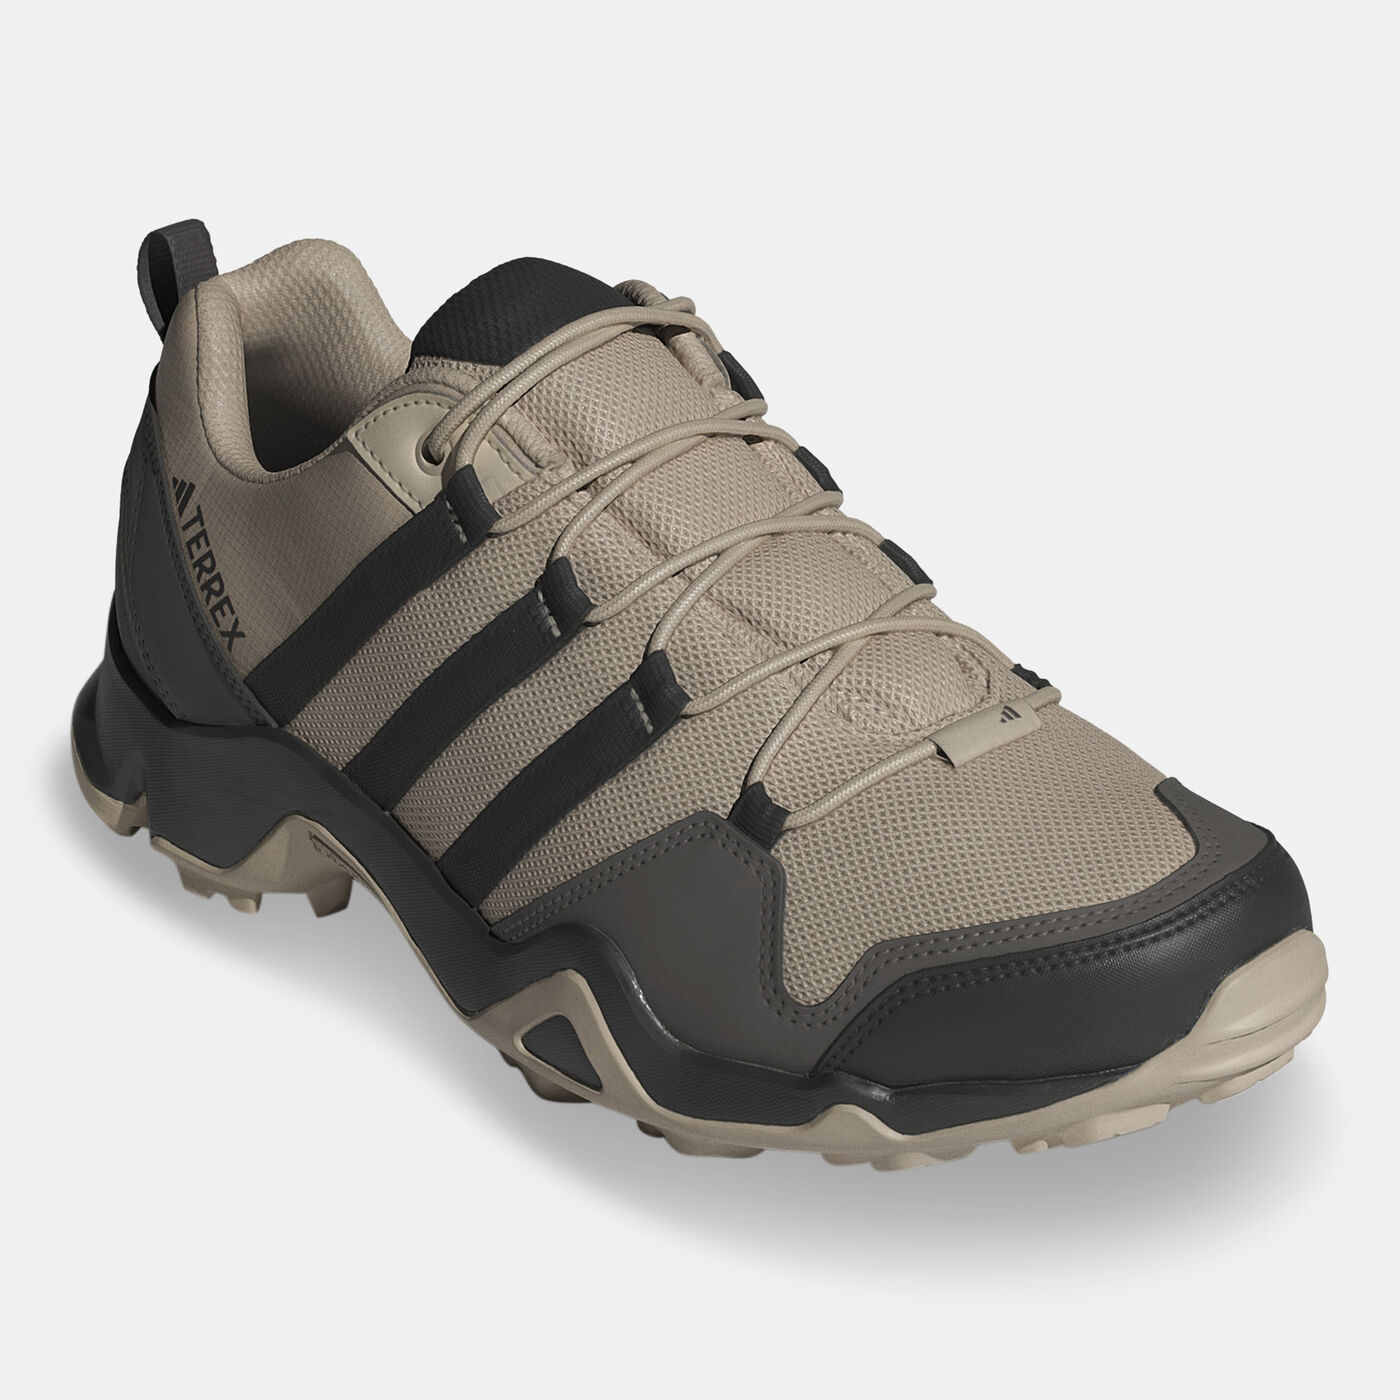 Men's AX2S Hiking Shoes